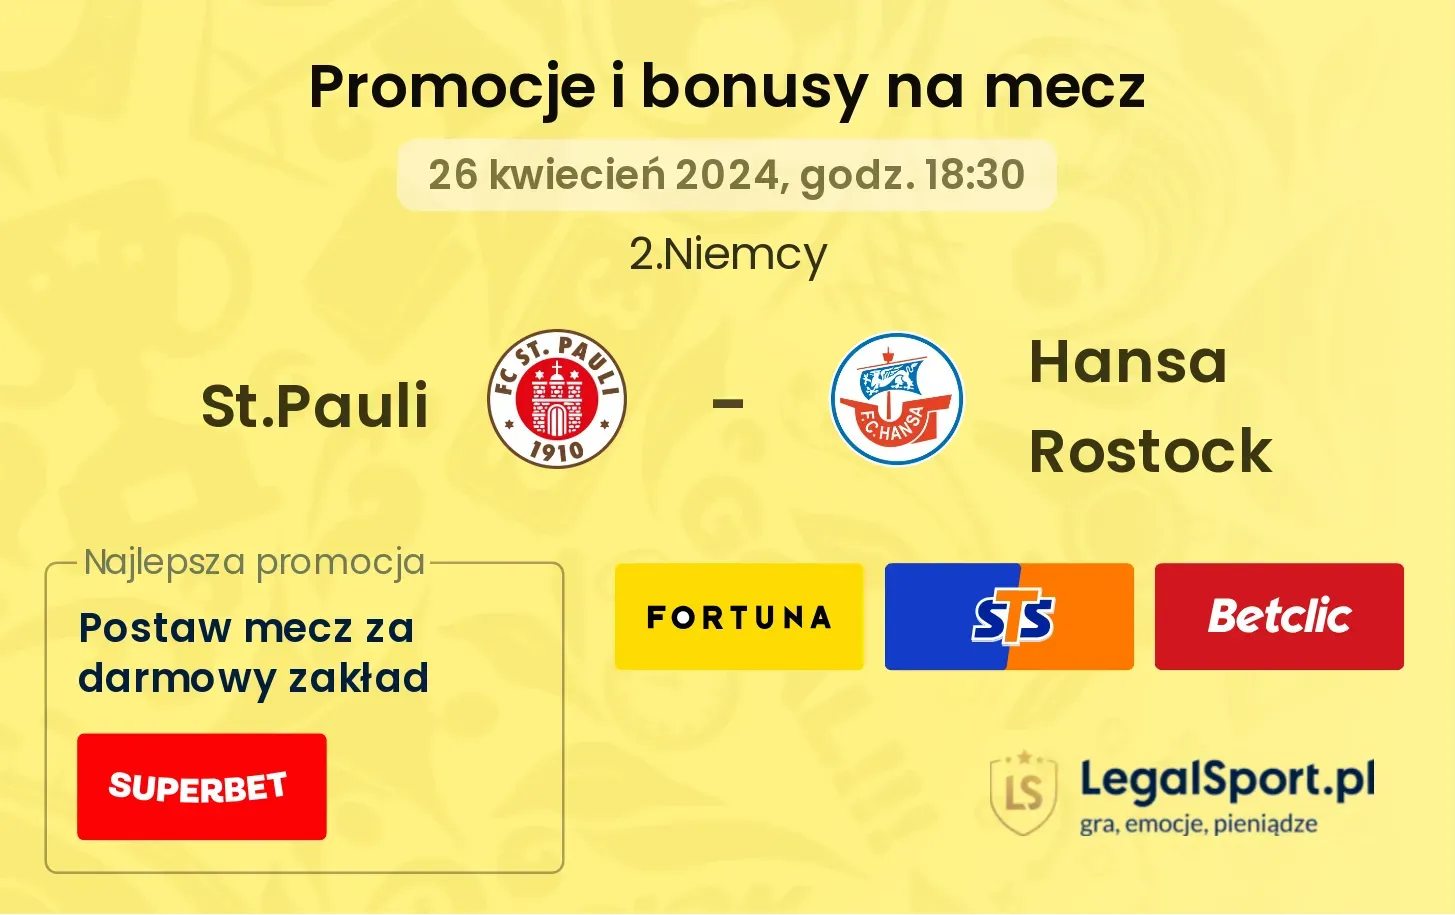 St.Pauli - Hansa Rostock promocje bonusy na mecz